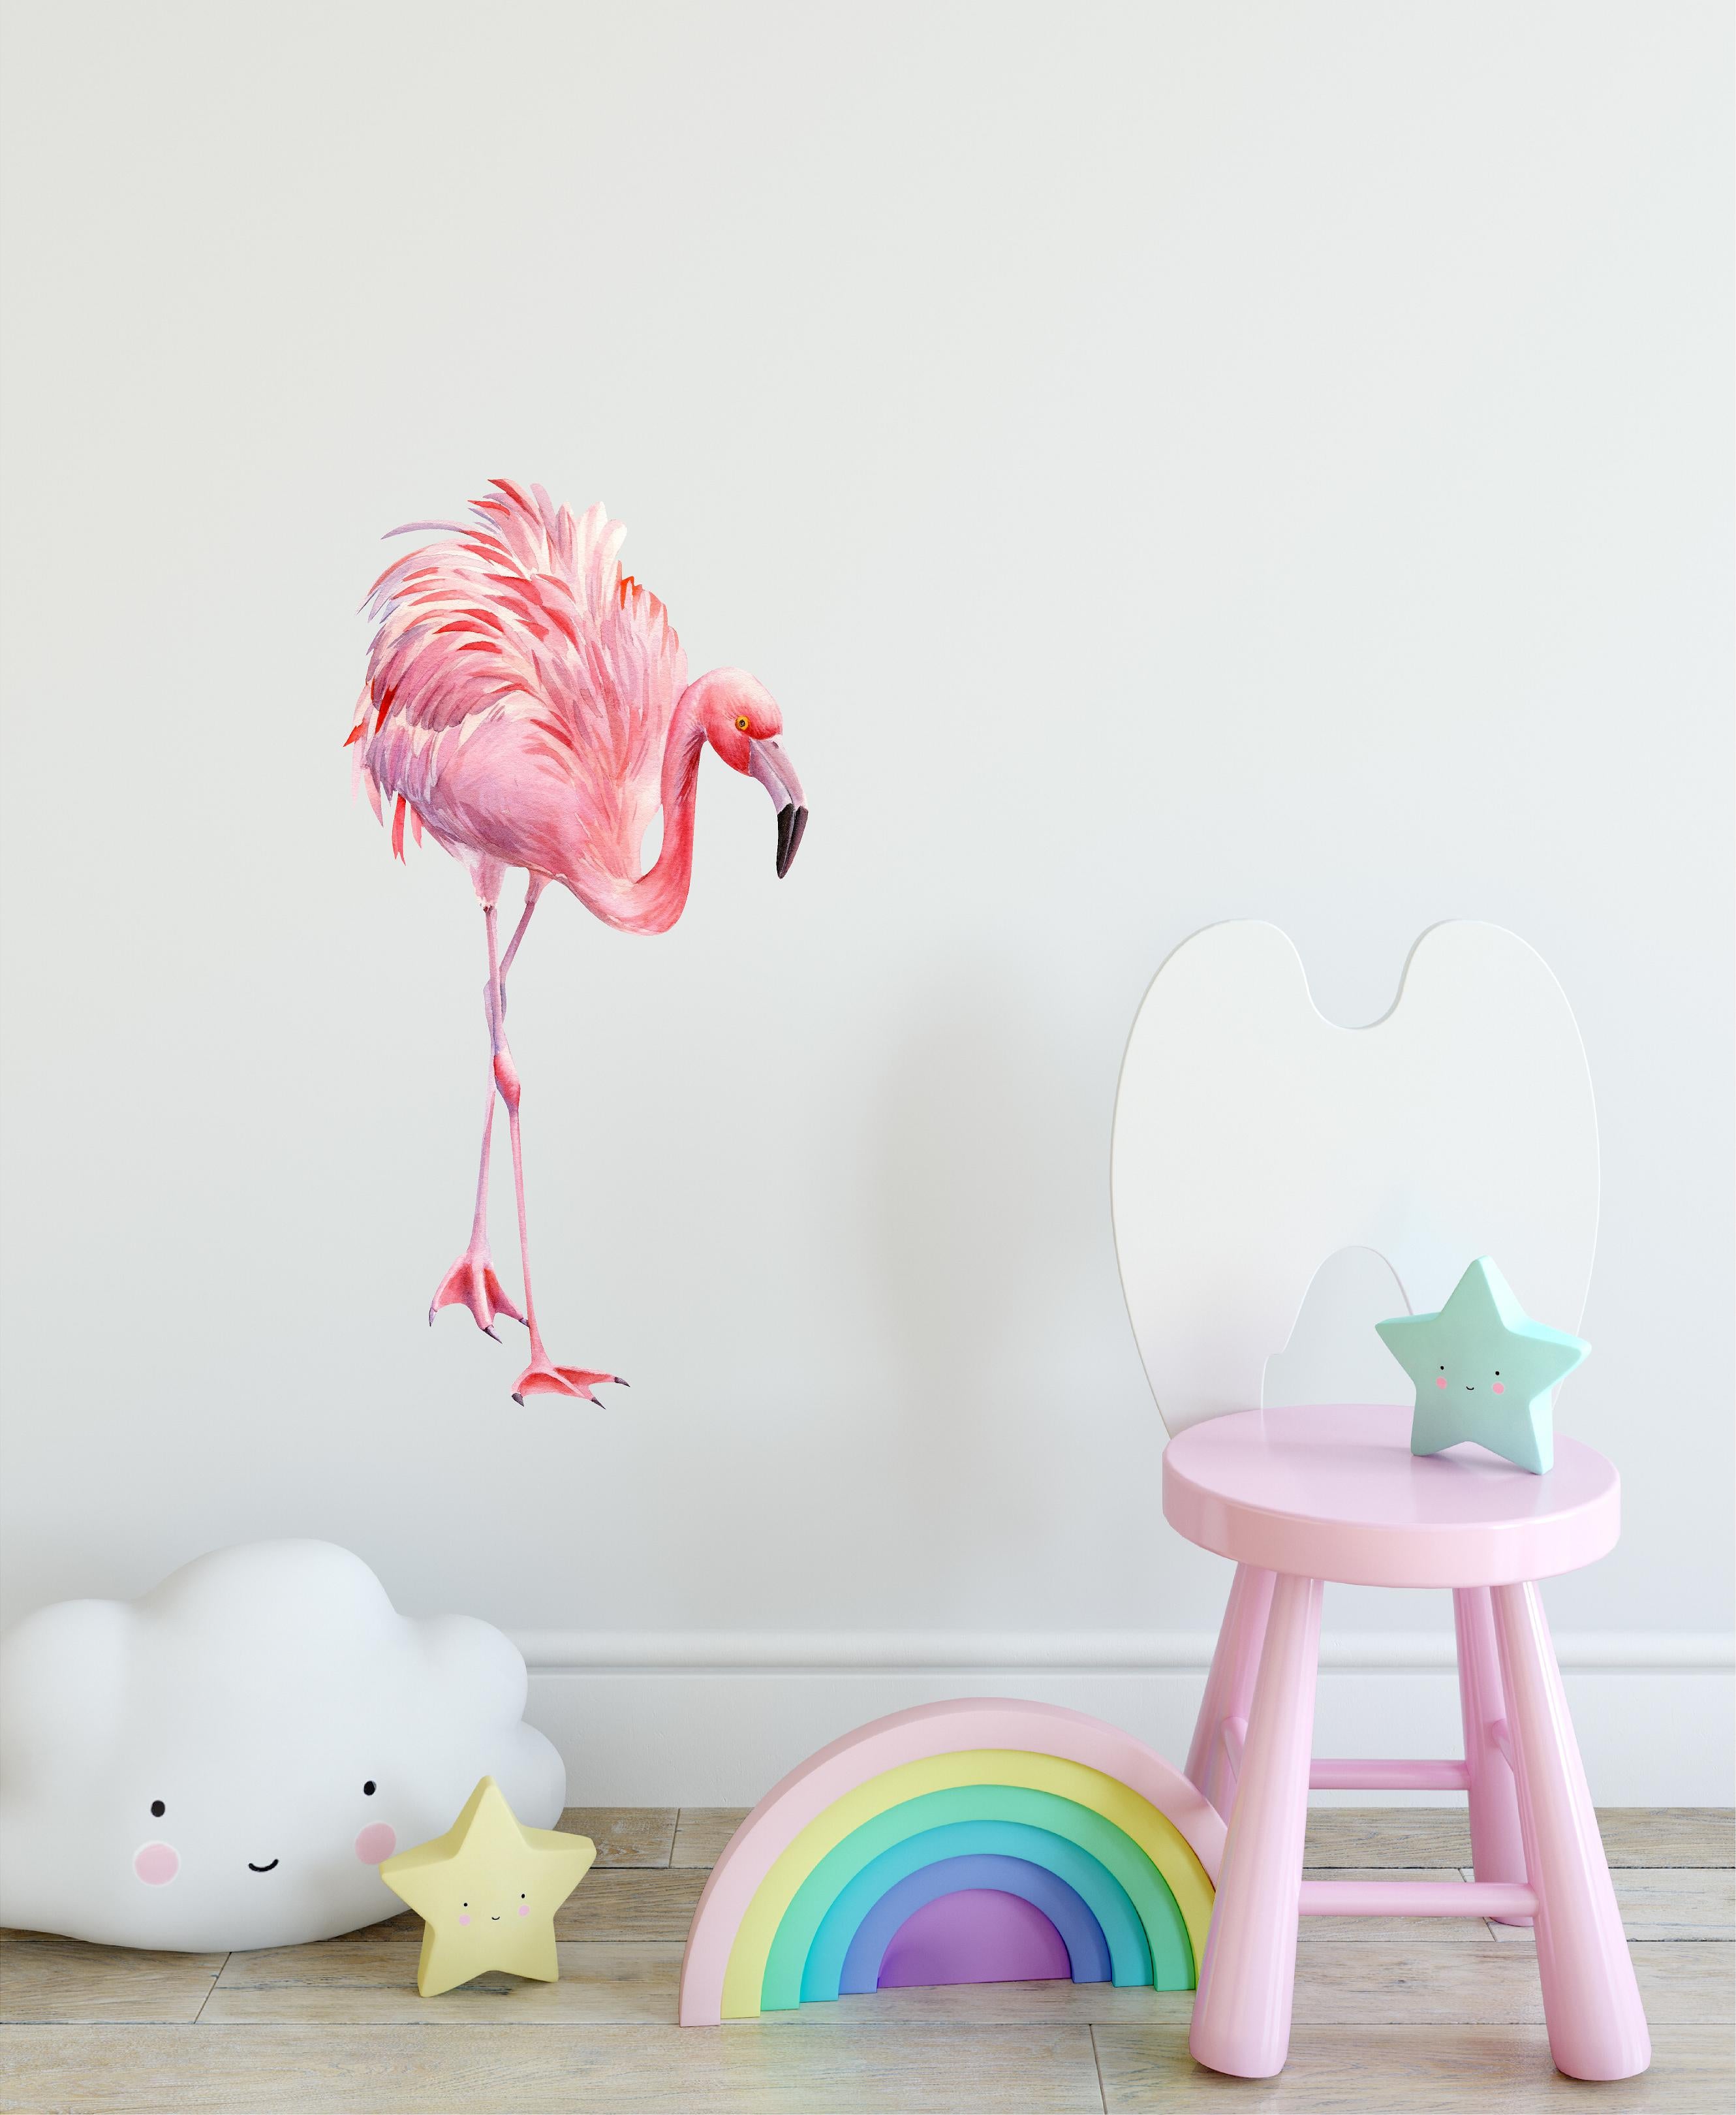 Watercolor Pink Flamingo #2 Wall Decal Tropical Bird Safari Animal Wall Sticker | DecalBaby